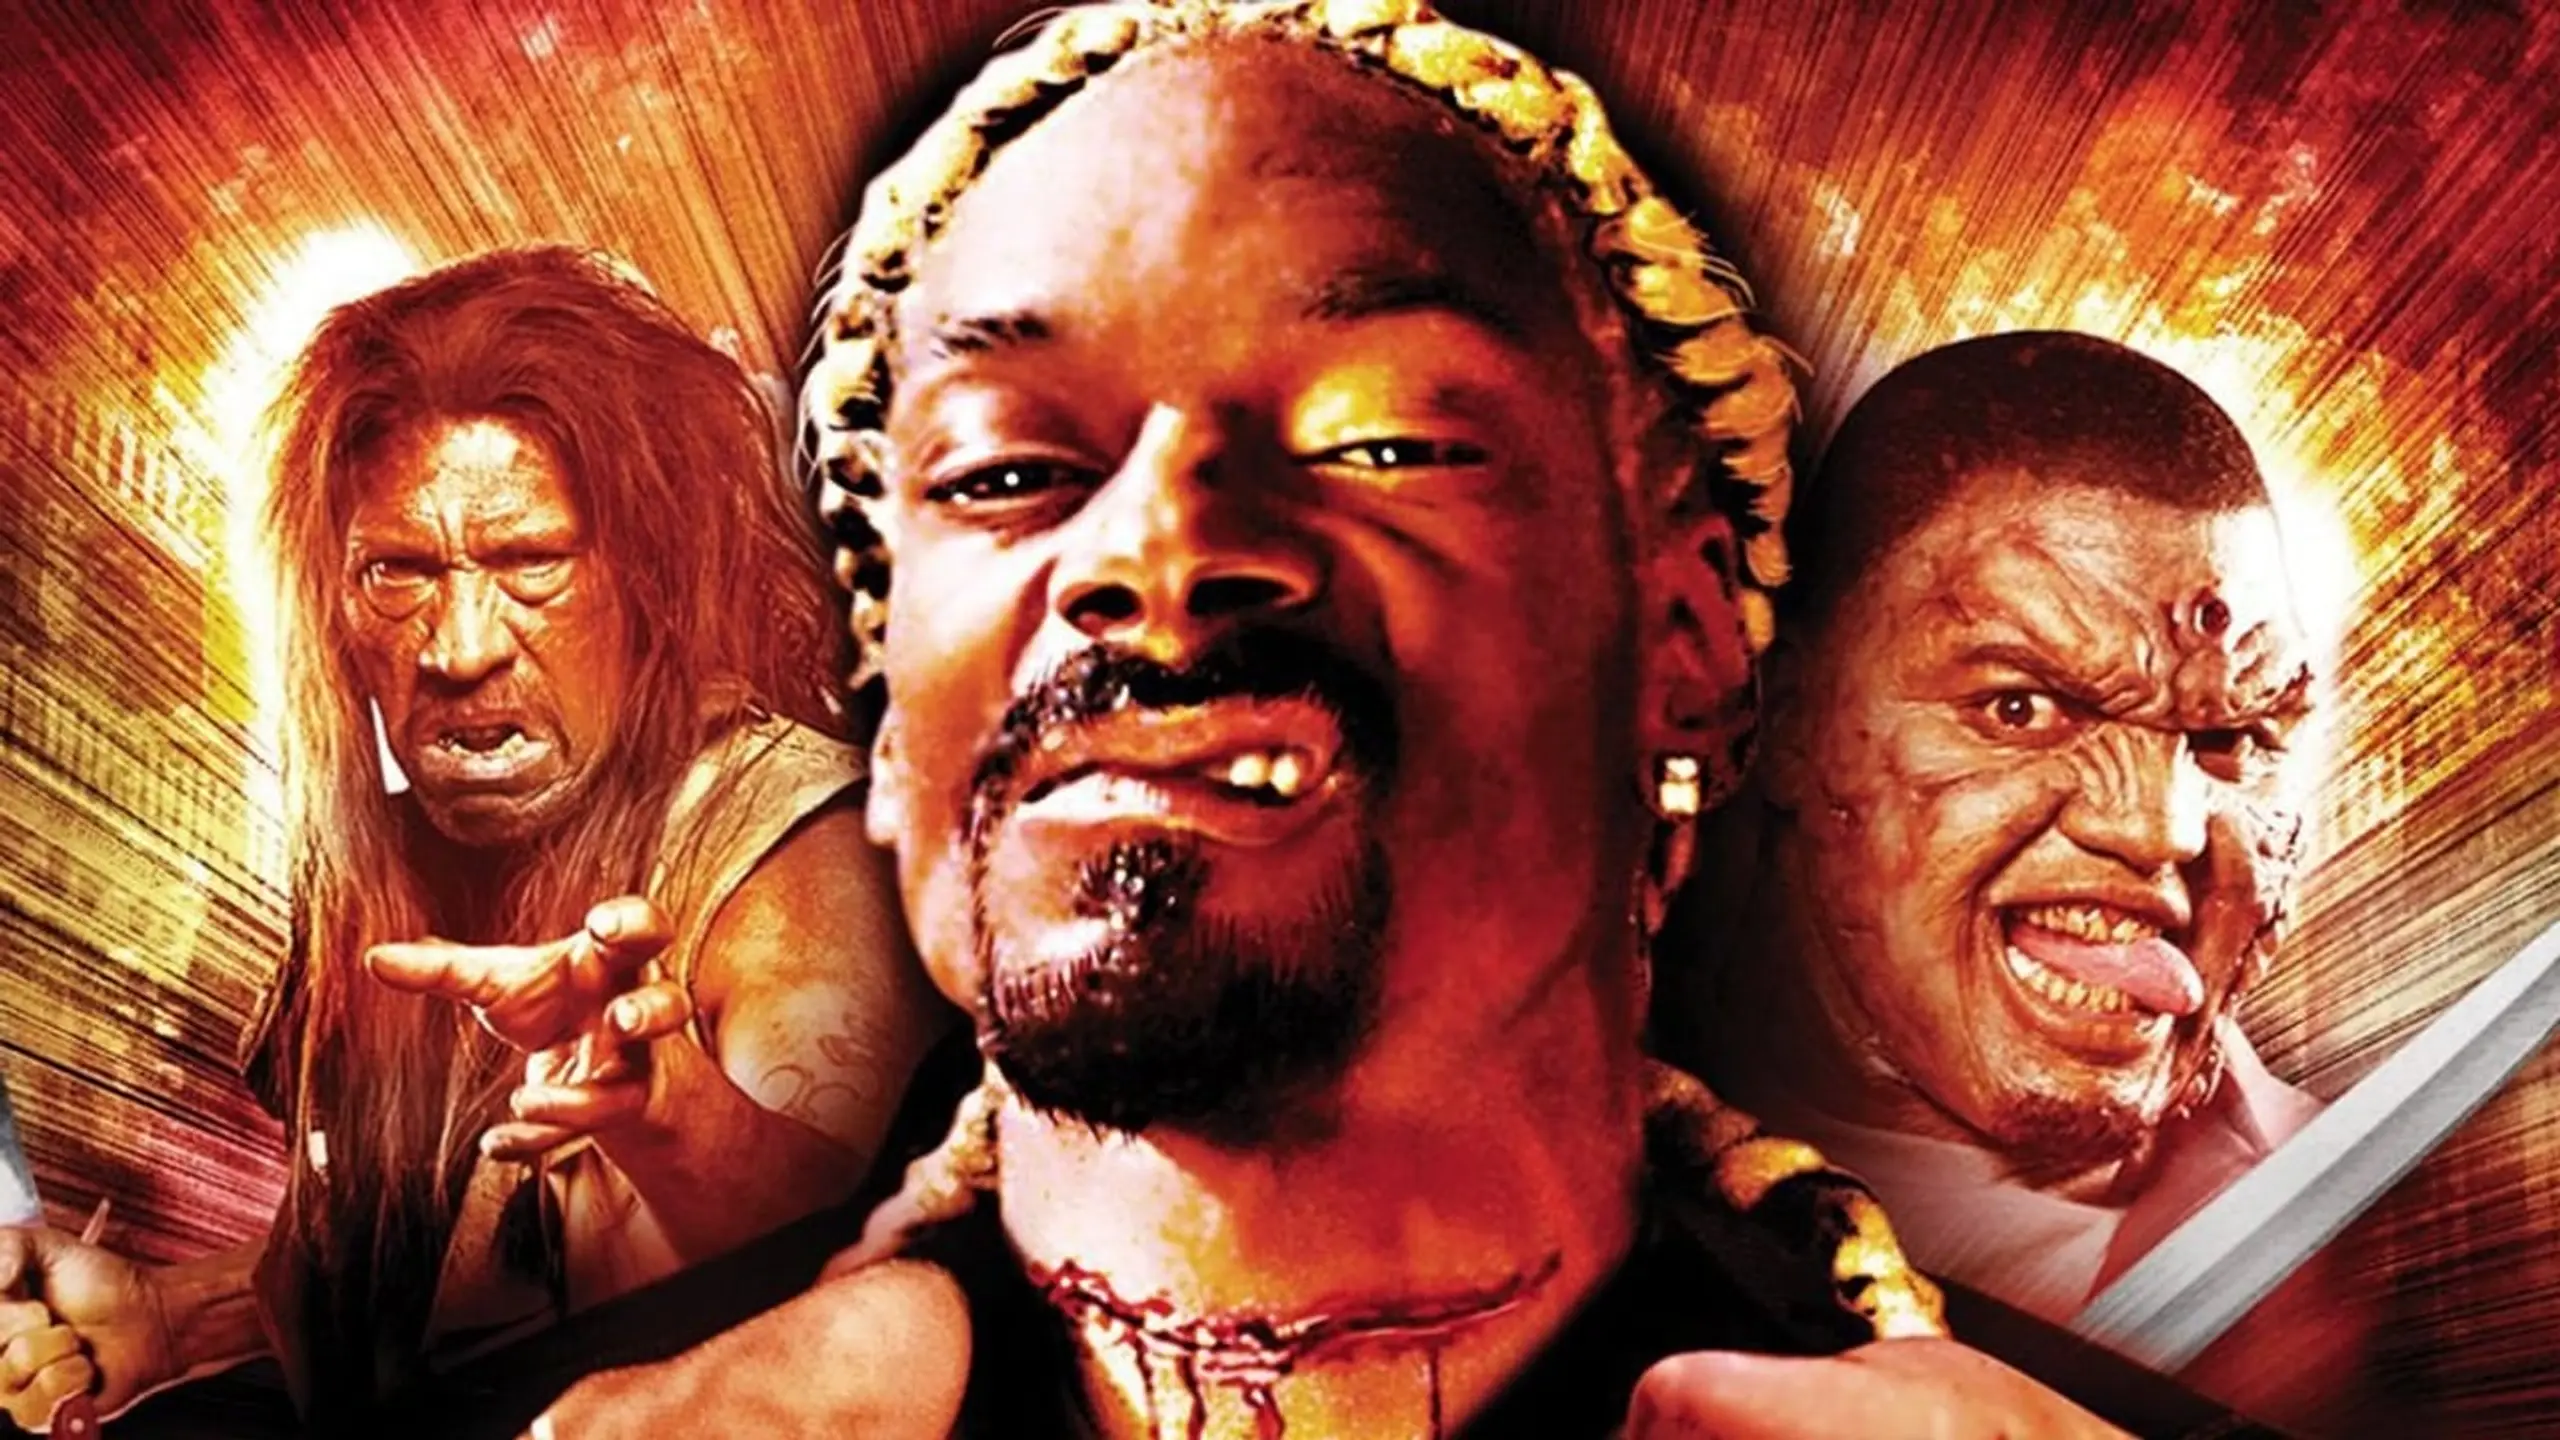 Snoop Dogg's Hood Of Horror